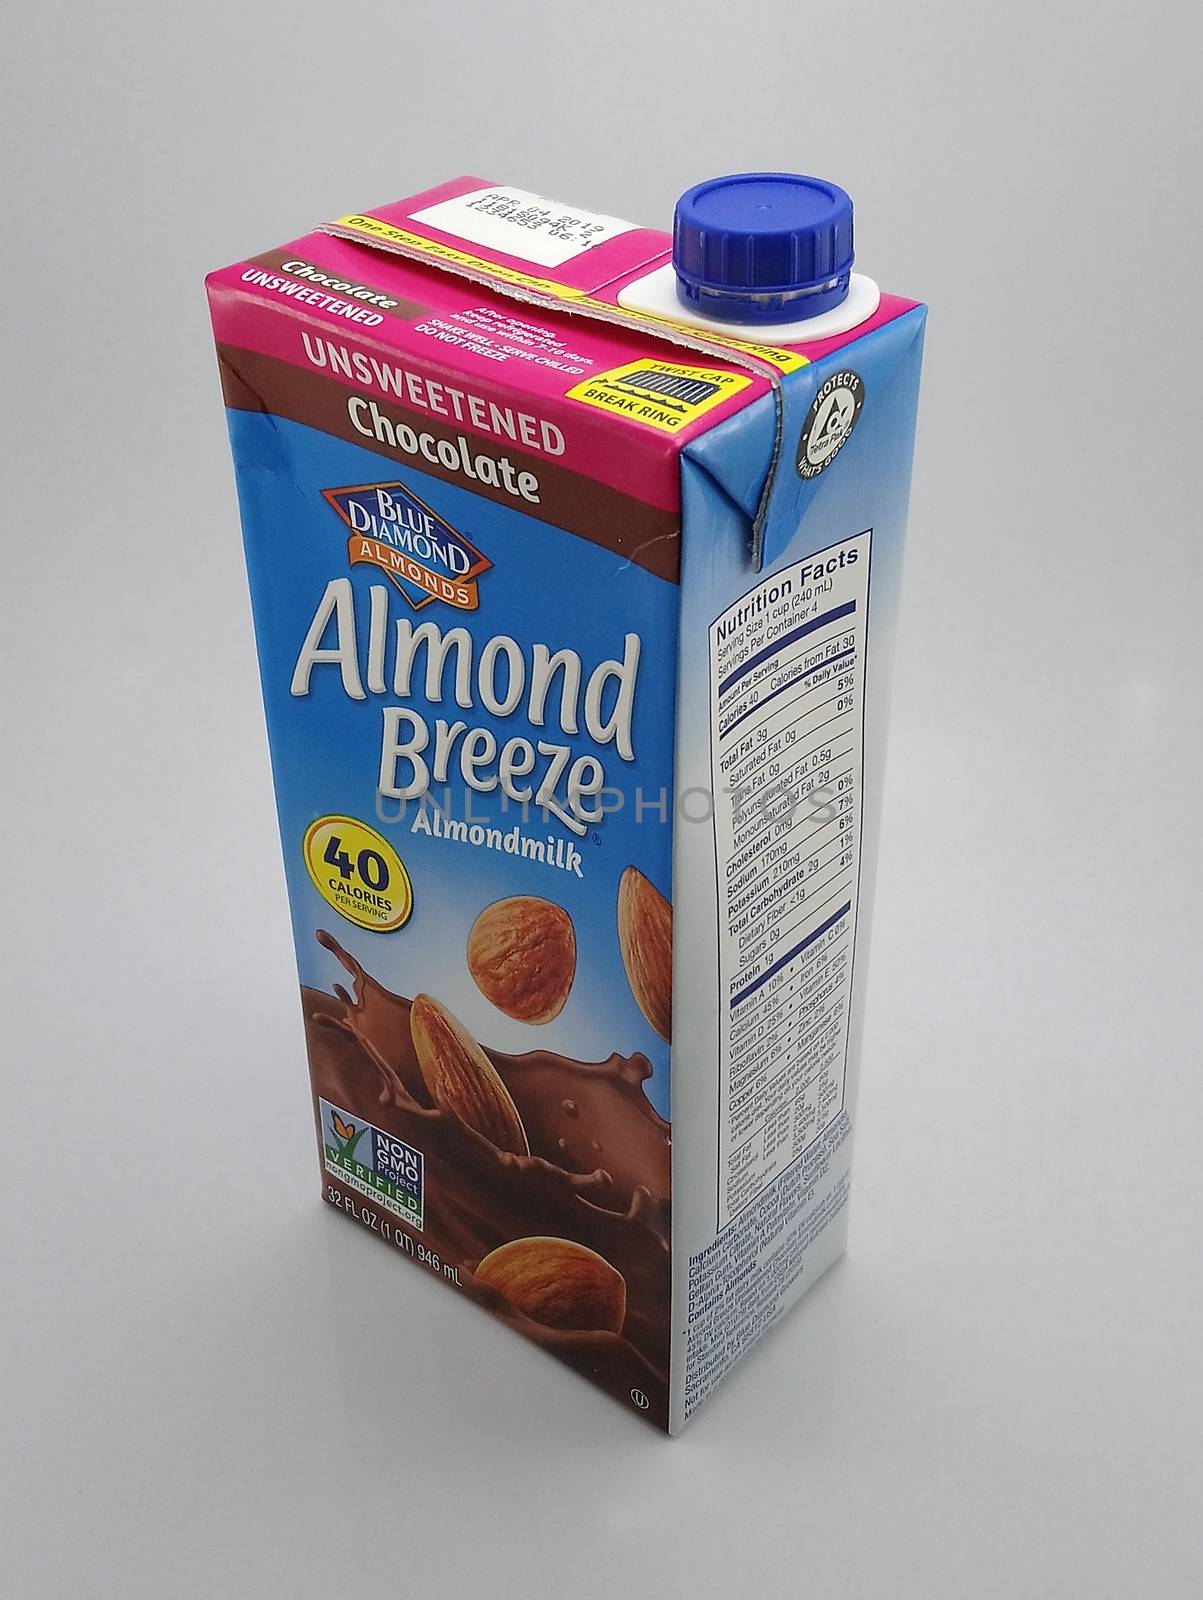 Almond breeze chocolate flavor almond milk in Philippines by imwaltersy